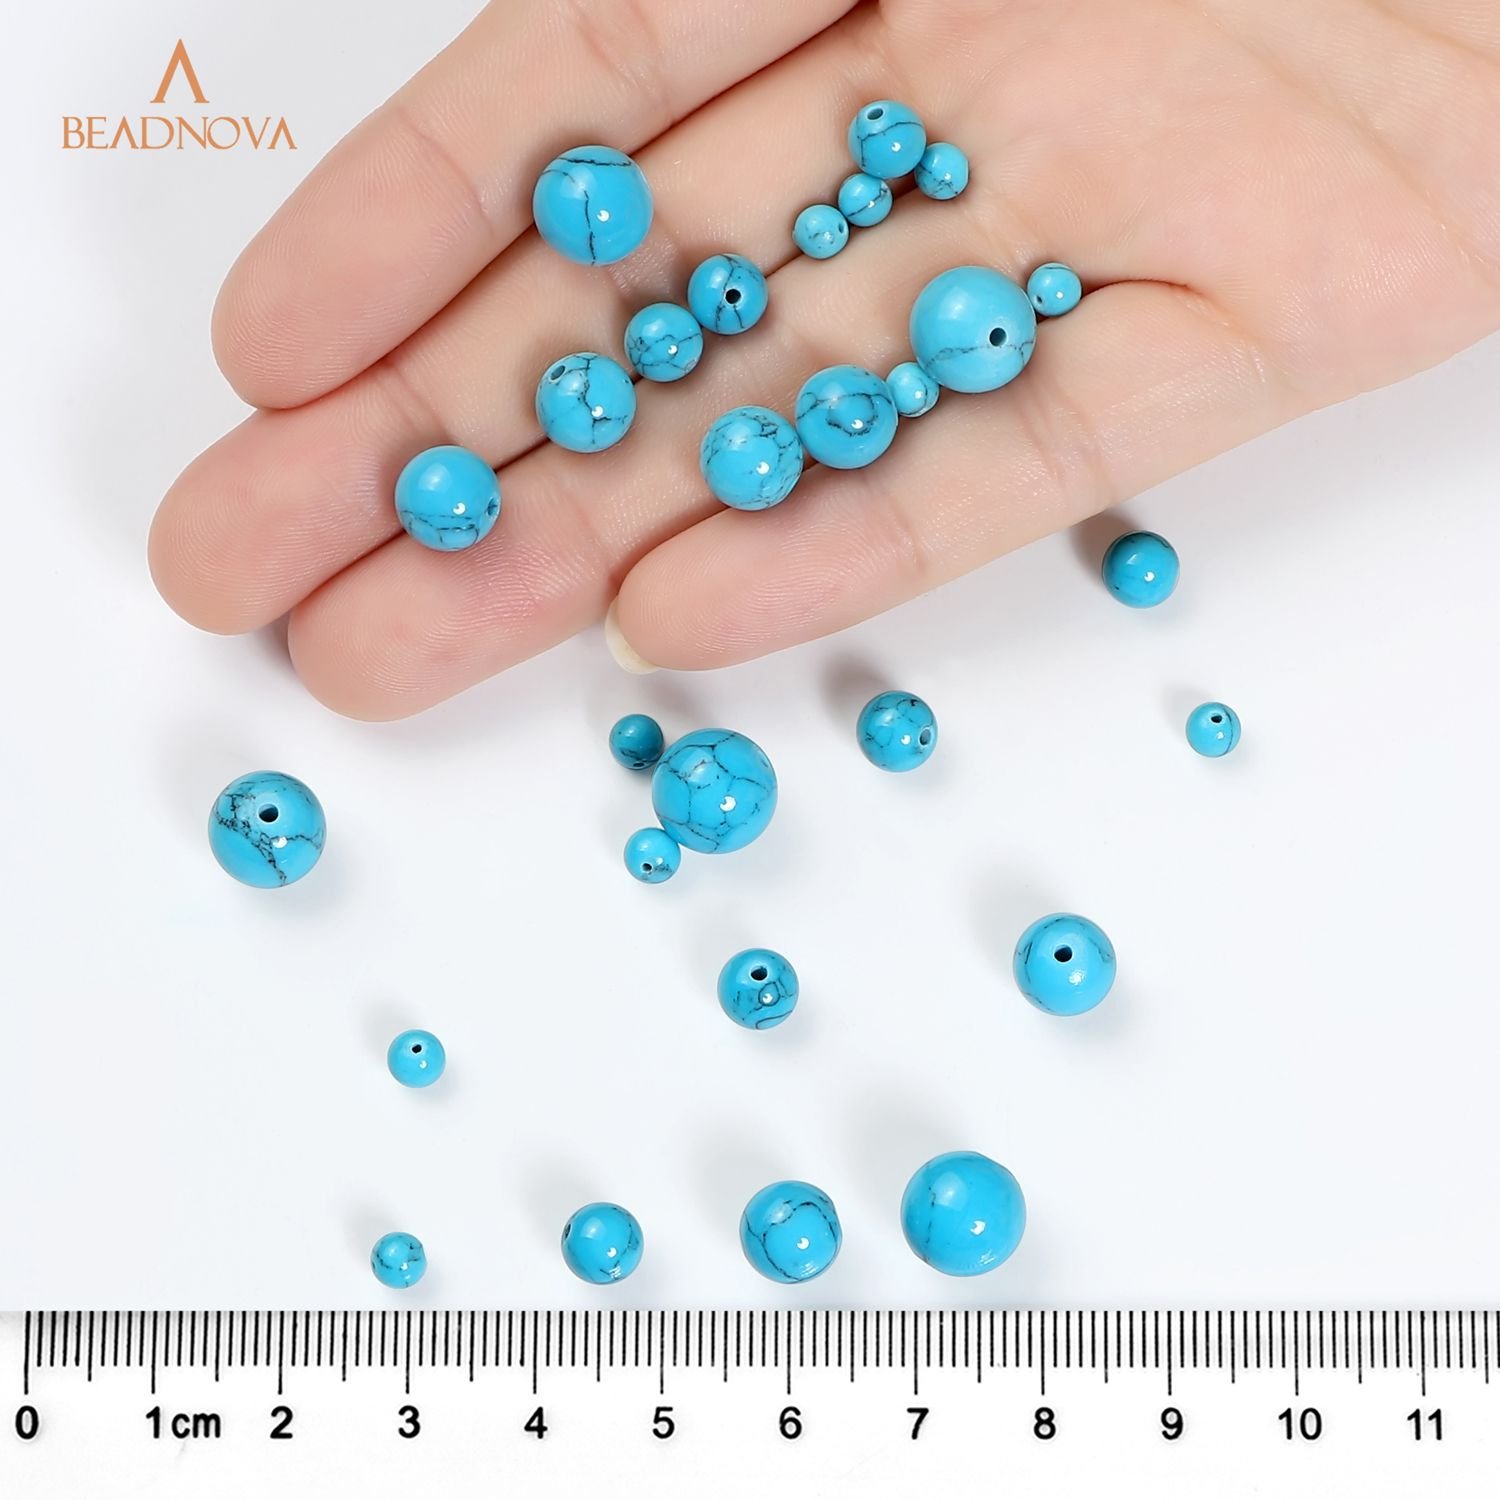  MOKYYus Blue Turquoise Beads, 8mm Blue Turquoise Gemstone Round  Loose Beads for Jewelry Making, DIY Gifts, Necklaces, Bracelets, Yoga  Bracelets